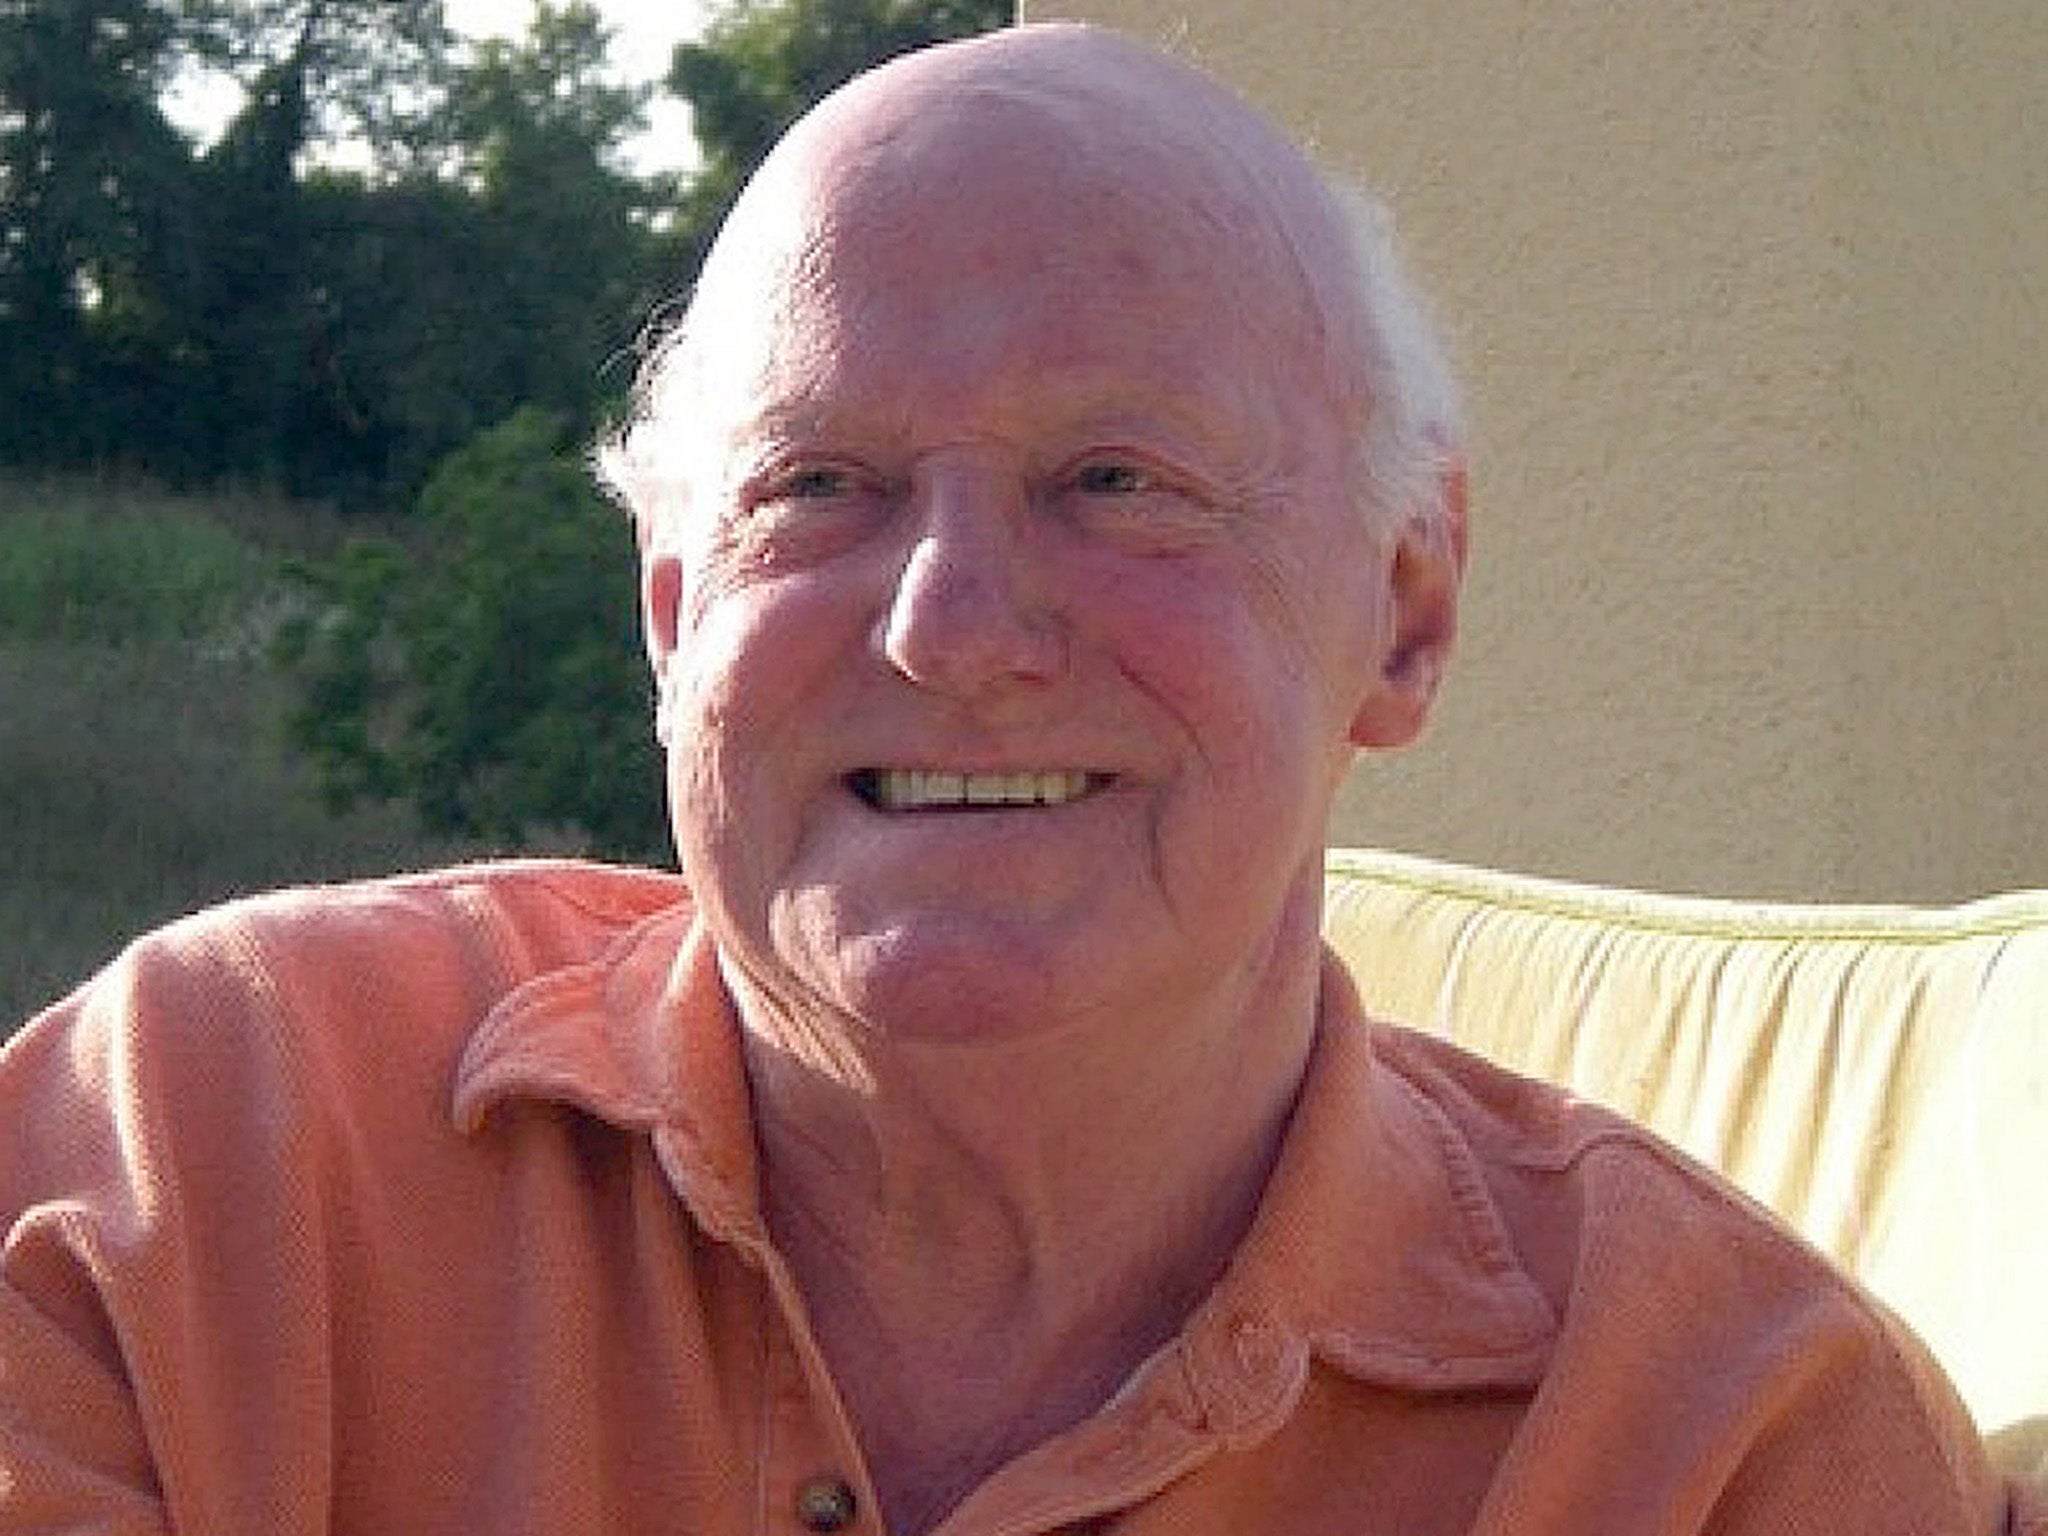 Robert Banks Stewart died from cancer